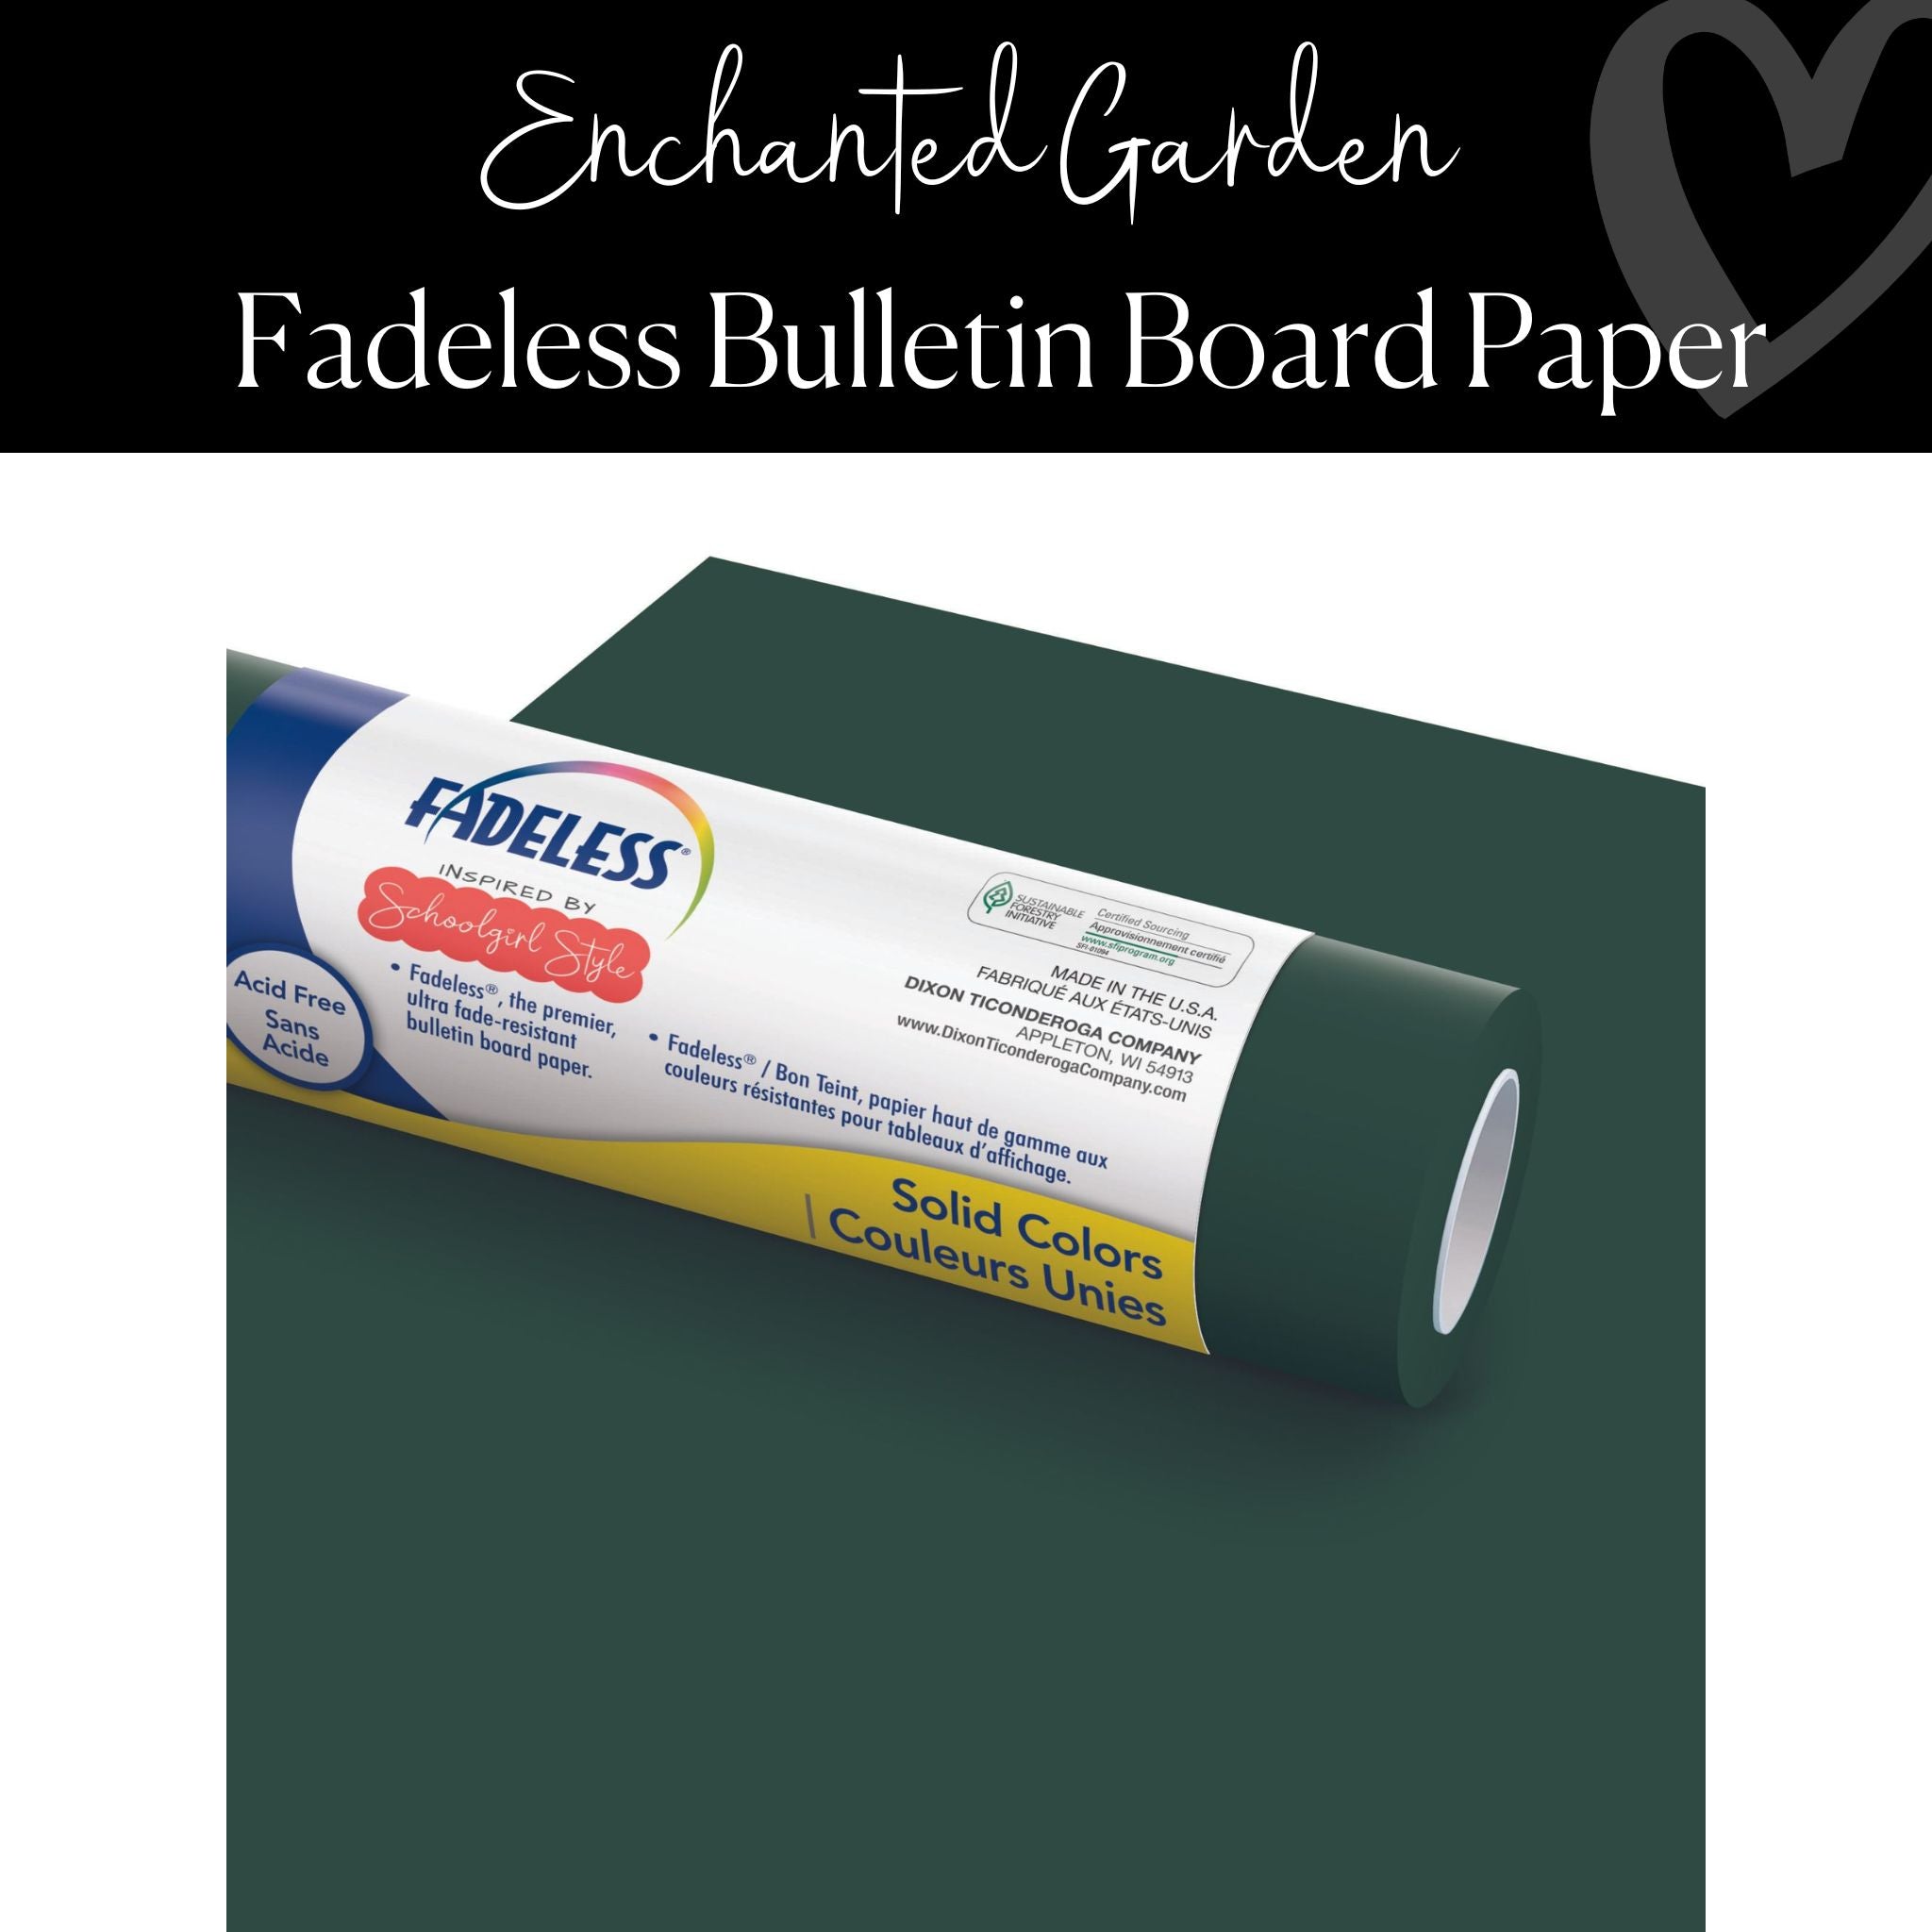 Fadeless Green Bulletin Board Paper, Enchanted Garden